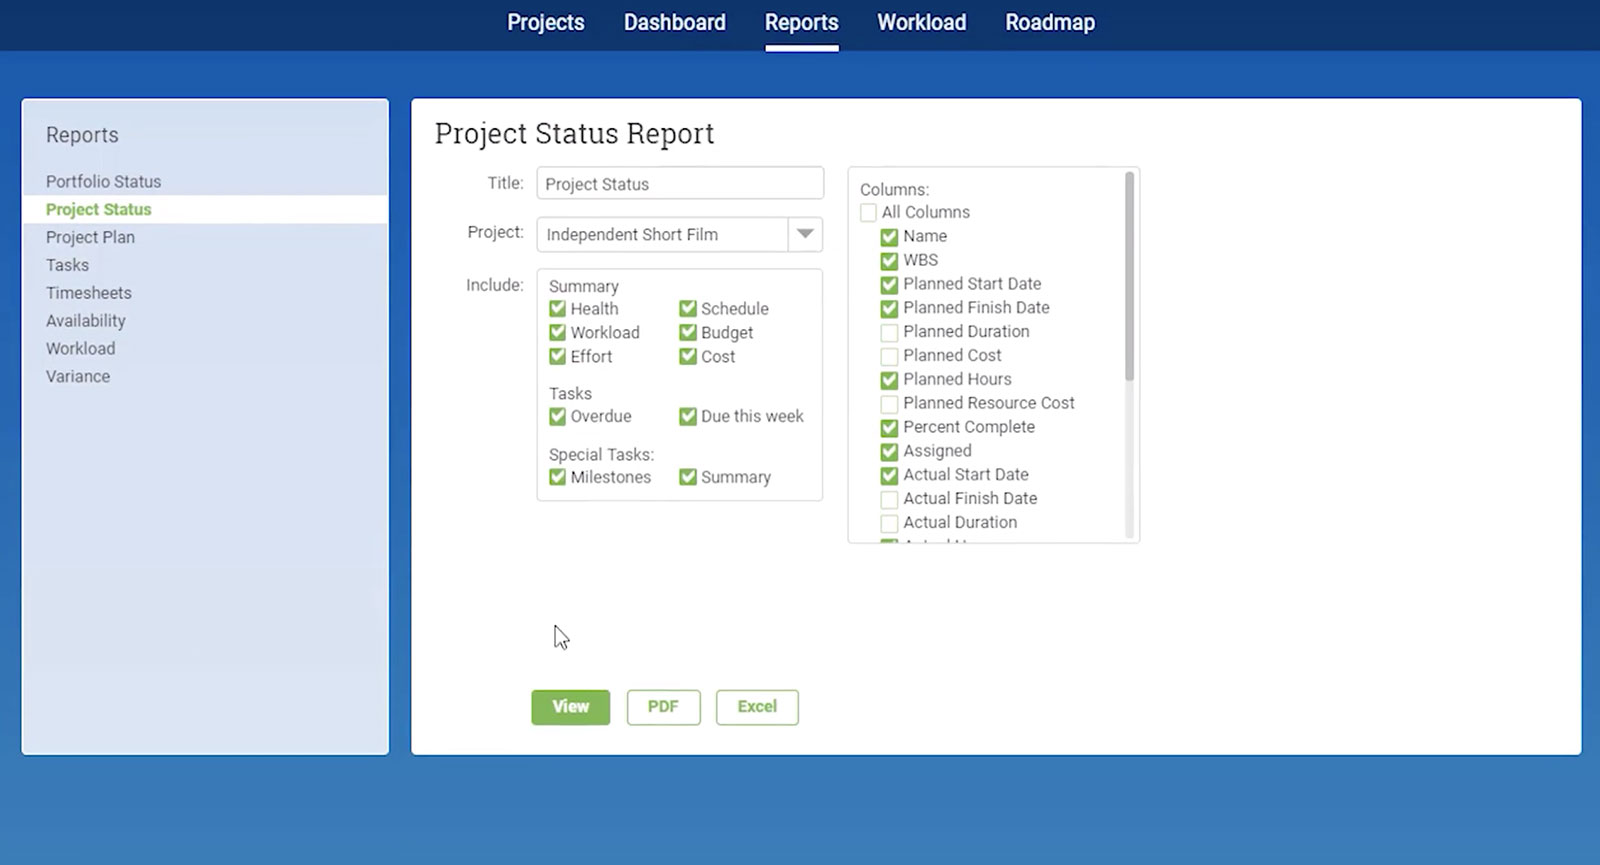 project status report screenshot in projectmanager.com